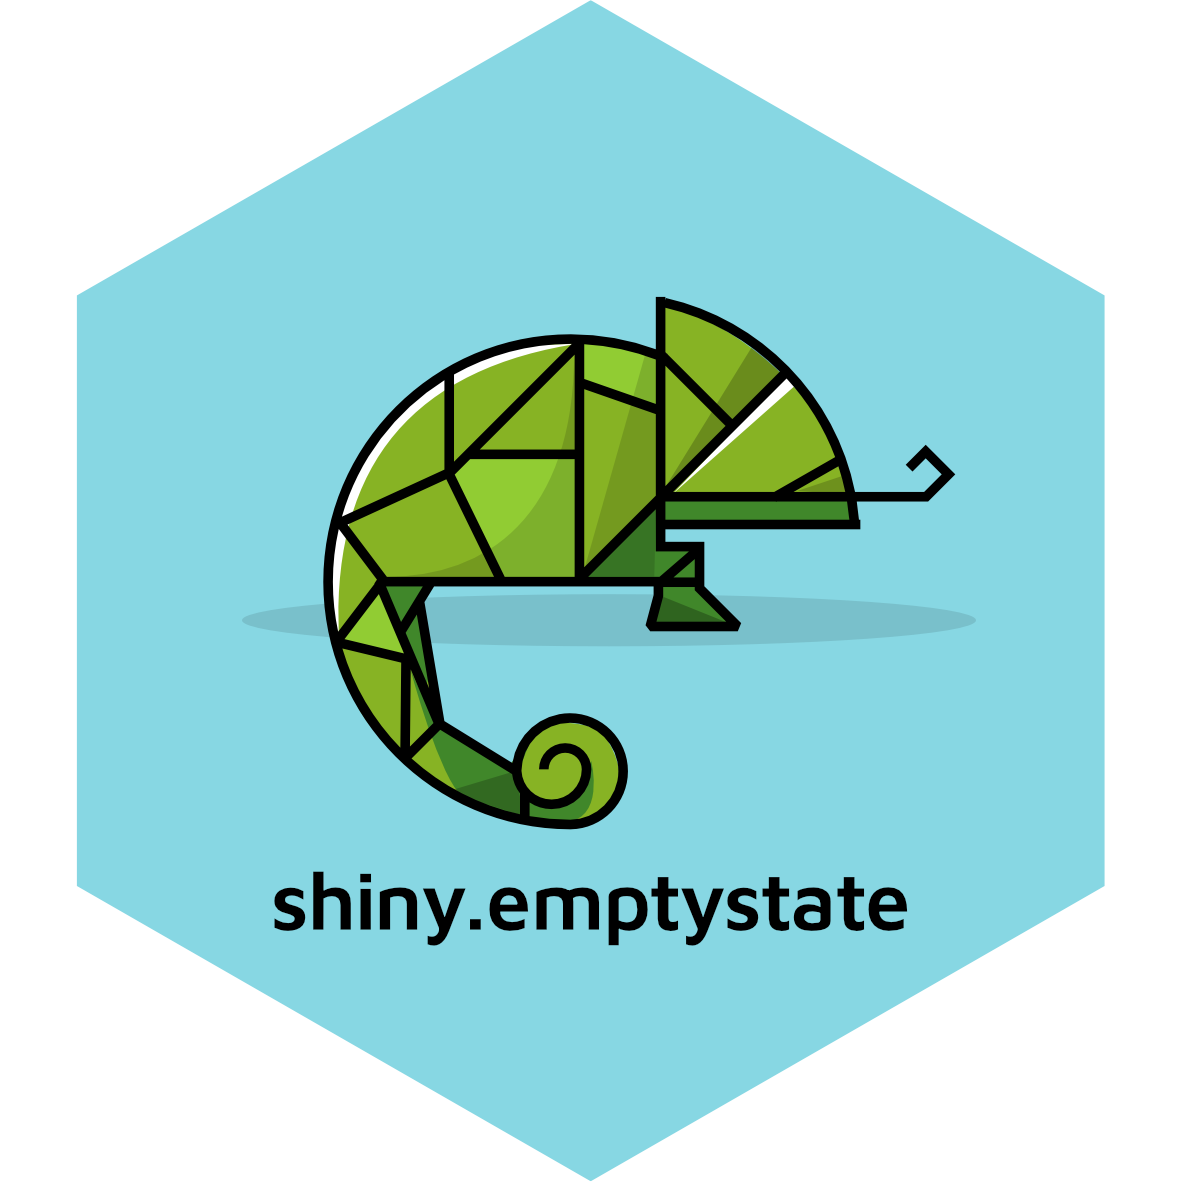 shiny.emptystate logo